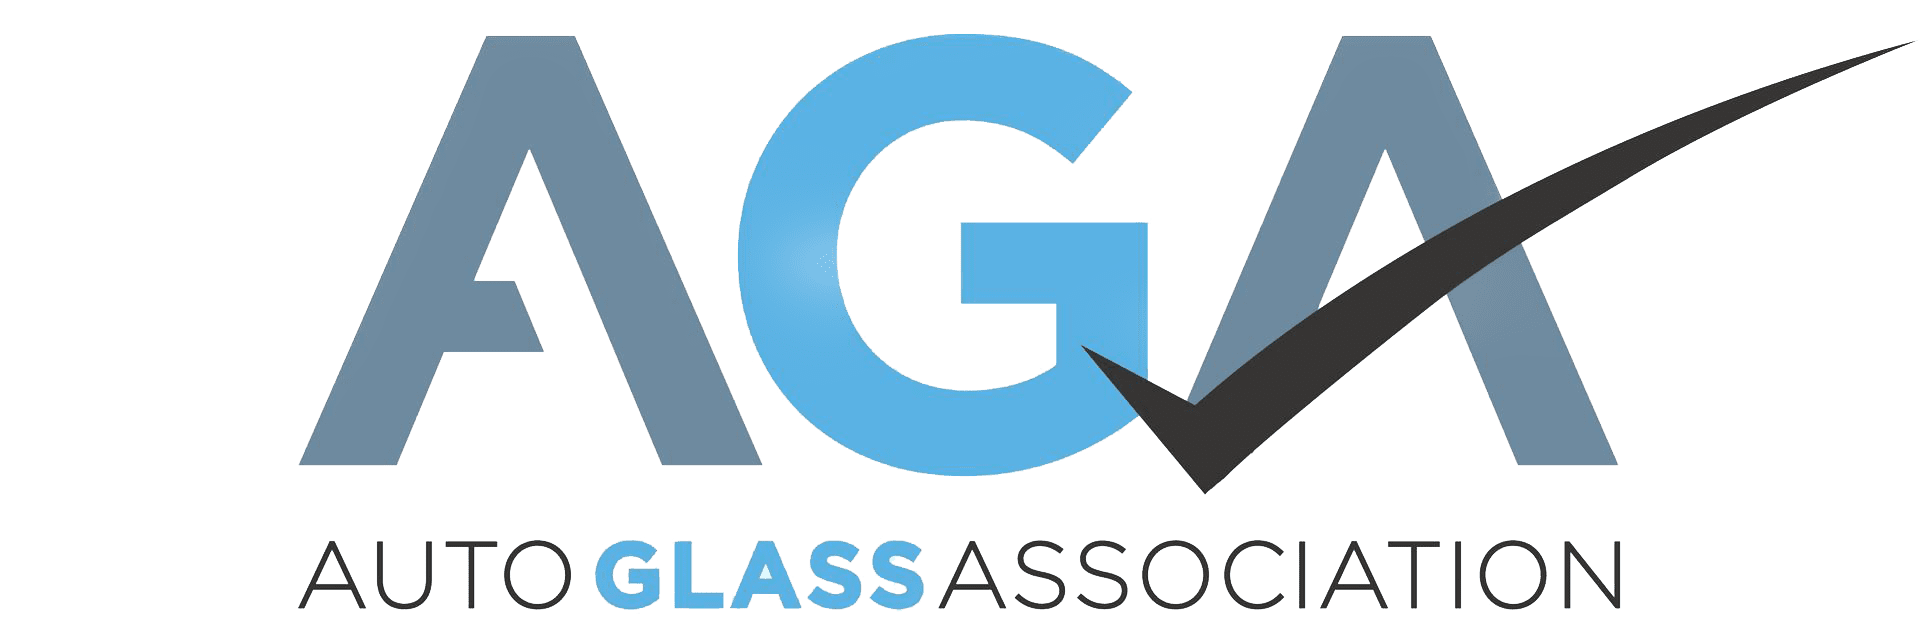 Auto Glass Association logo